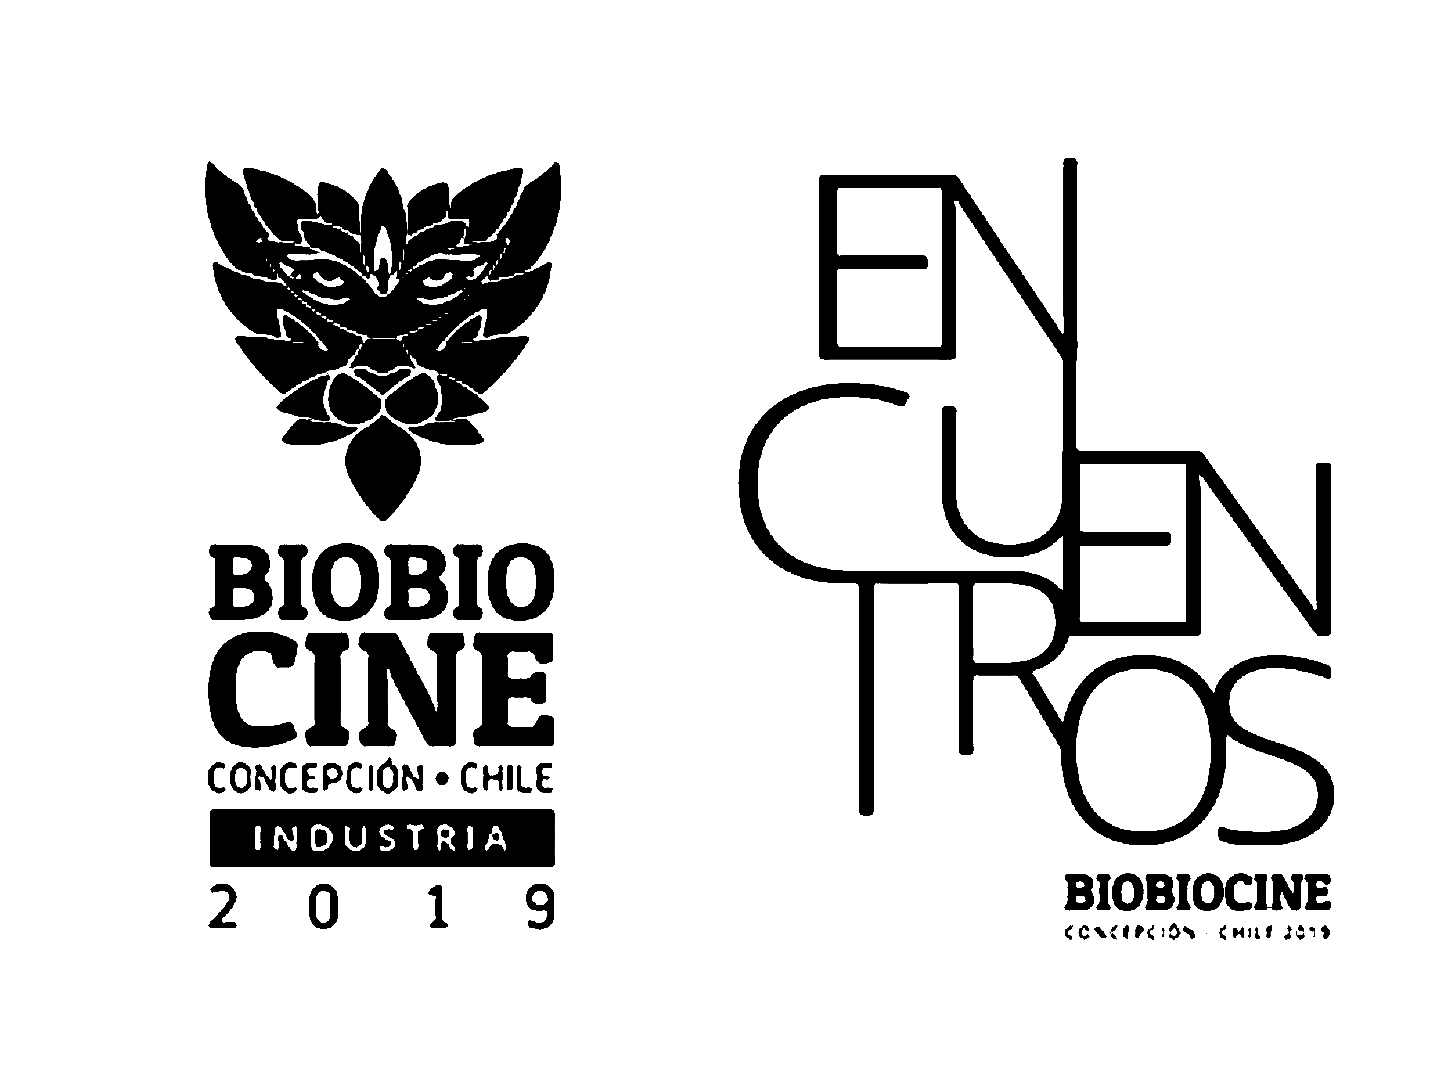 Bio Bio Cine, Industria